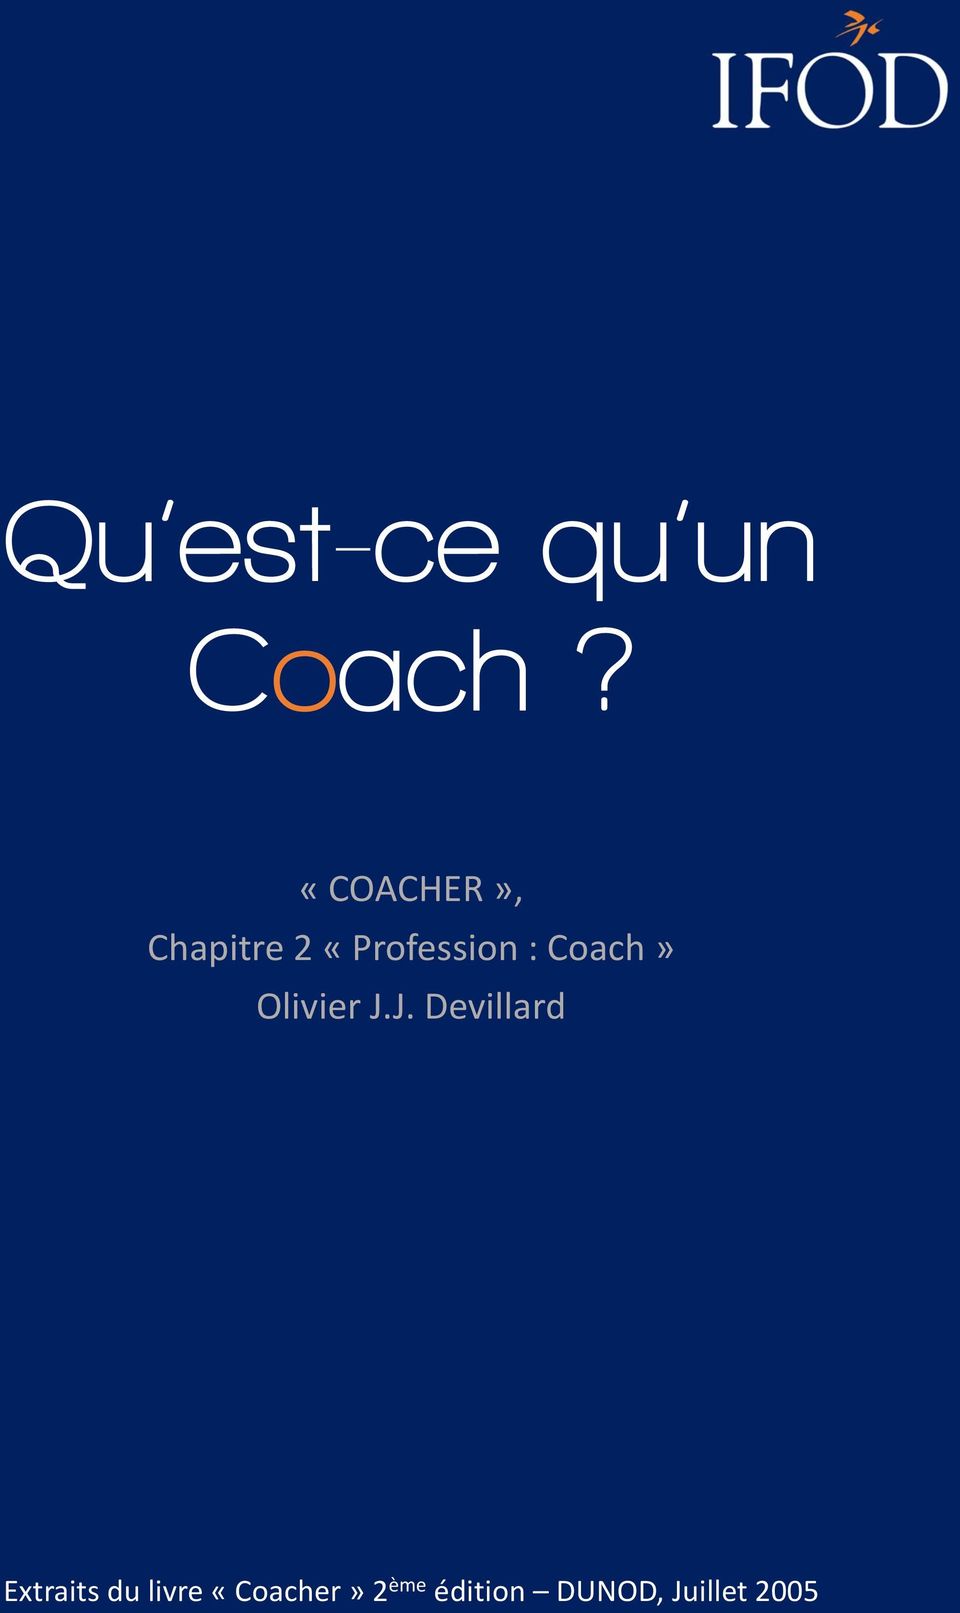 Coach» Olivier J.